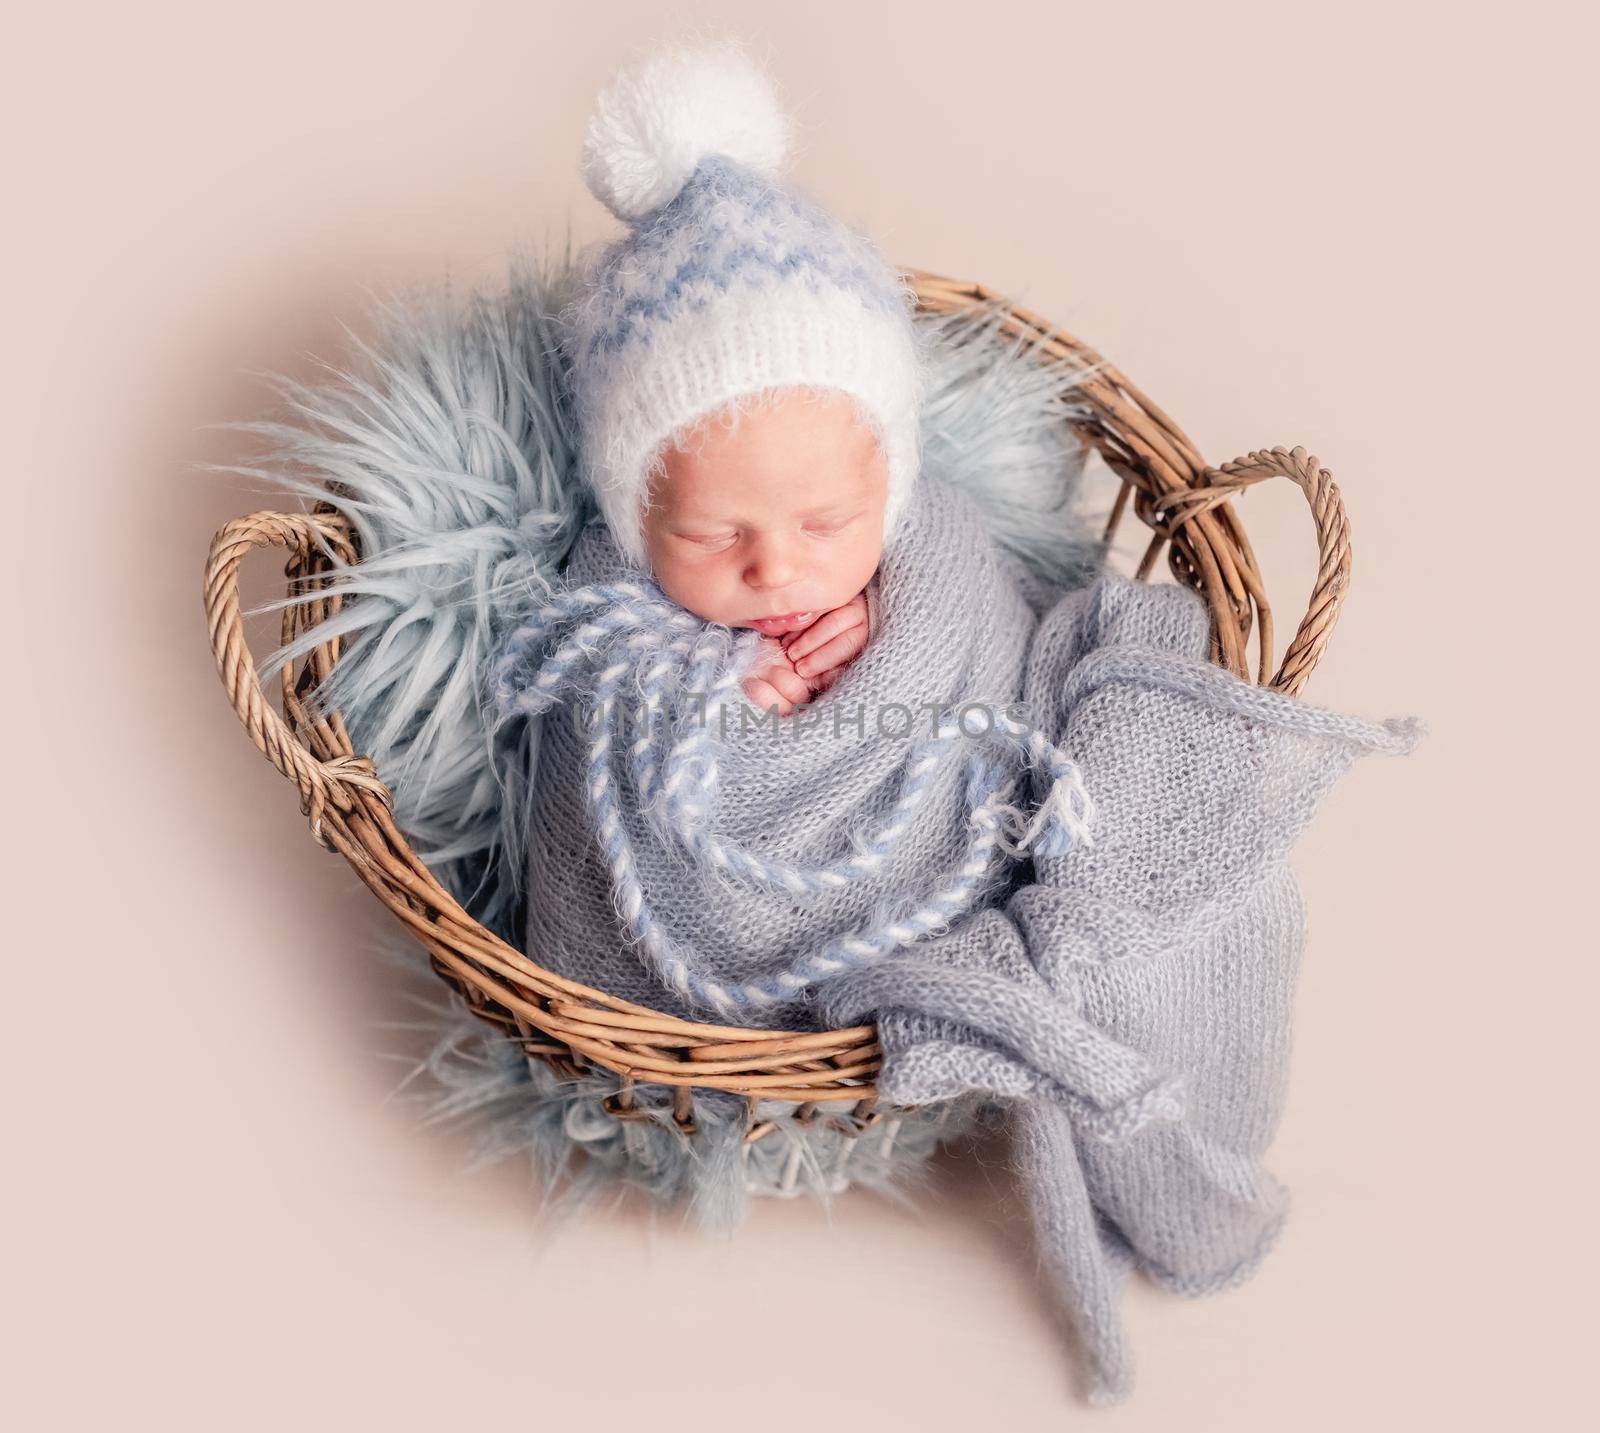 Baby sleeping in basket by tan4ikk1